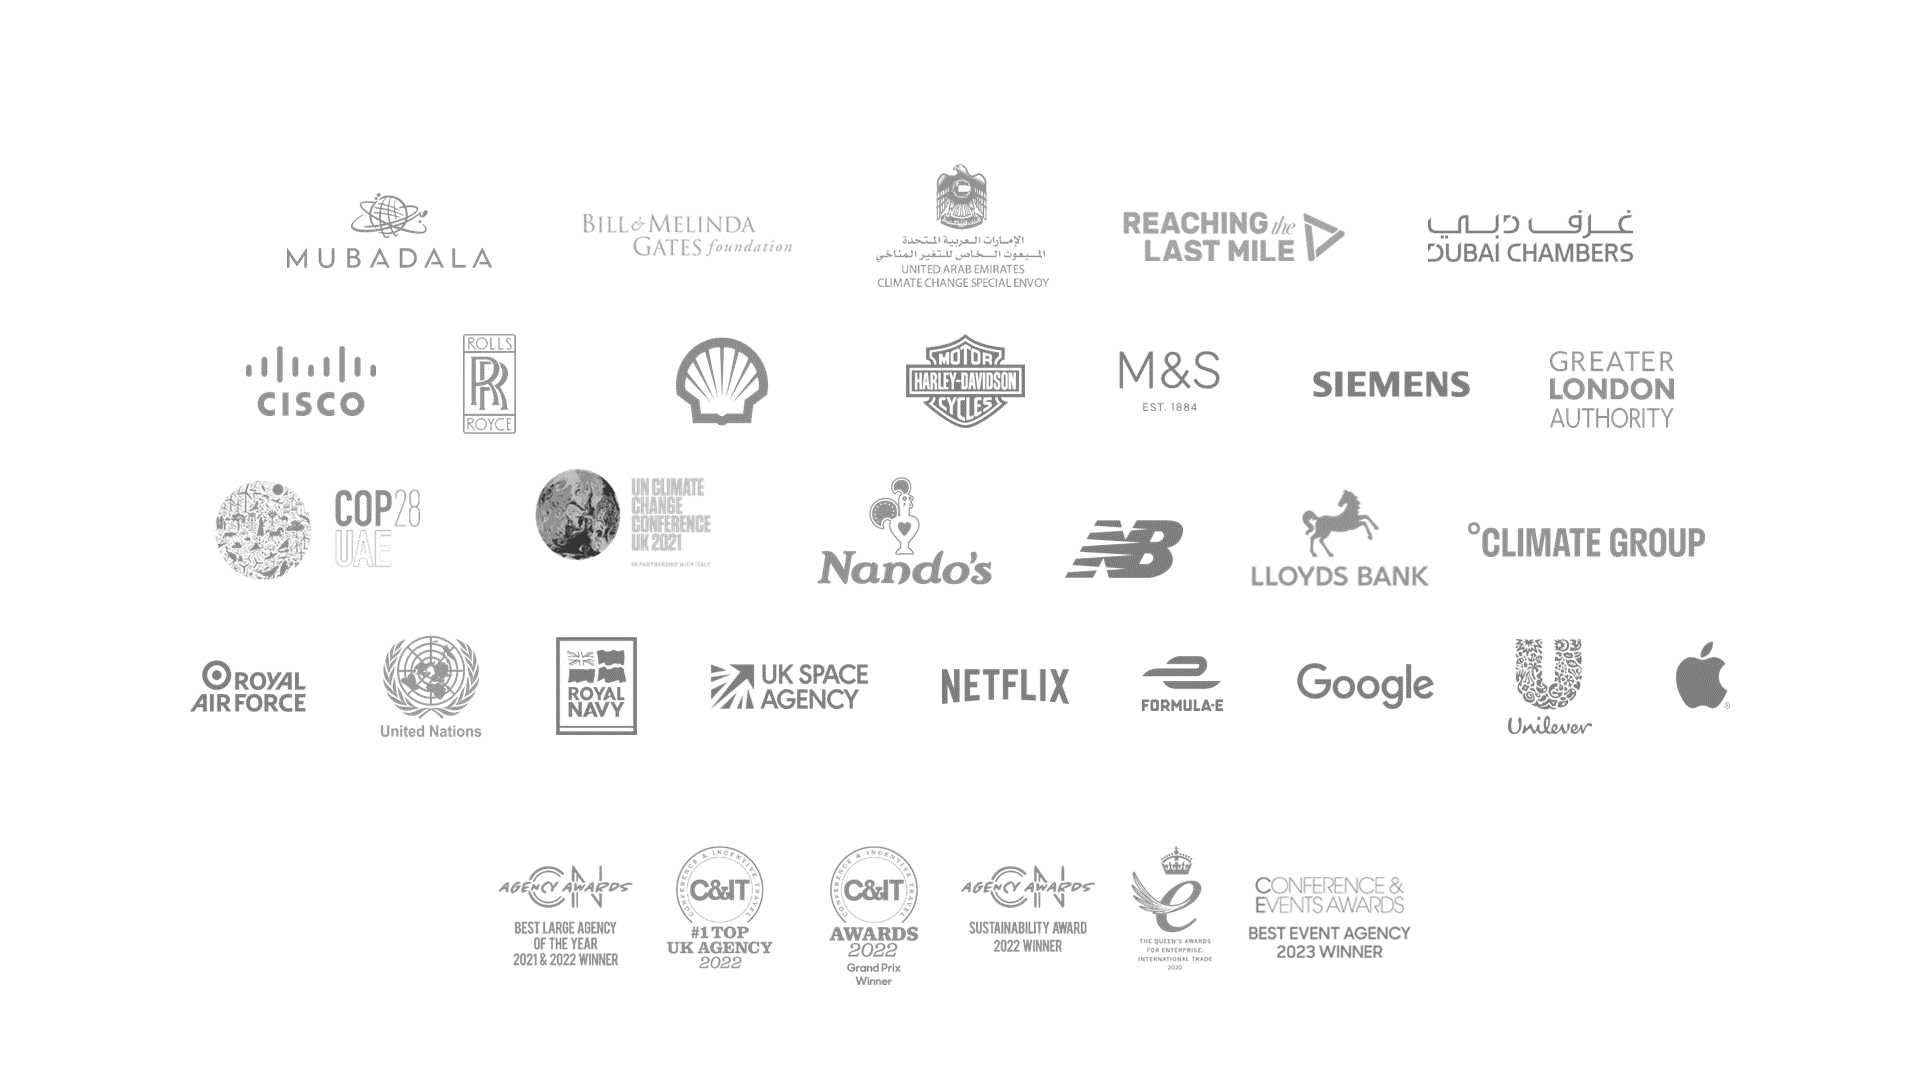 Client and award logos